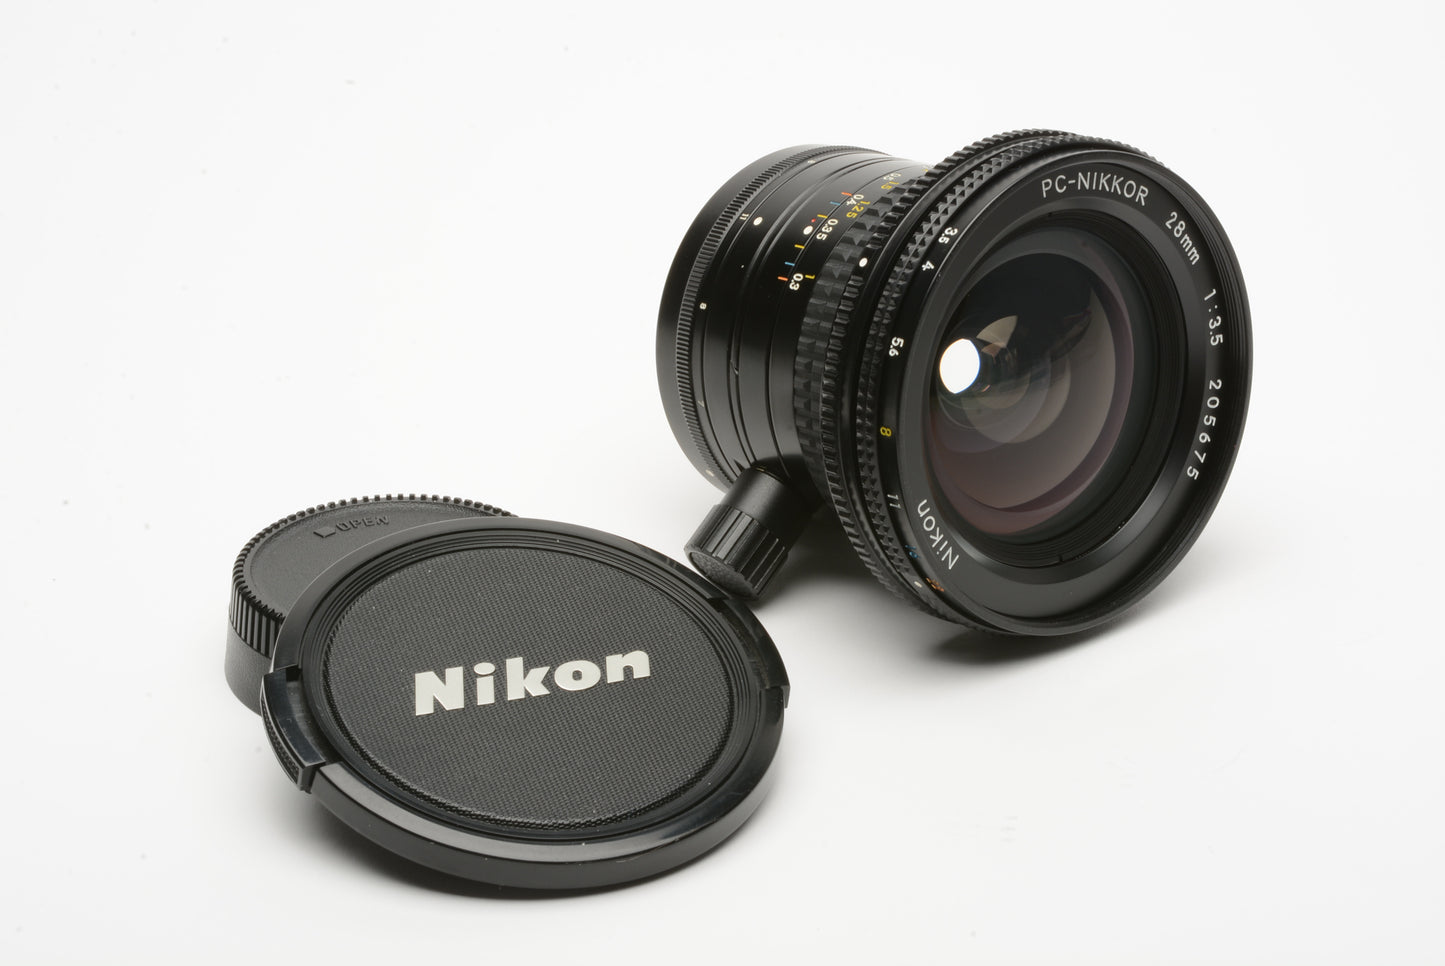 Nikon PC-Nikkor 28mm F3.5 lens, caps, MINT!  Very nice